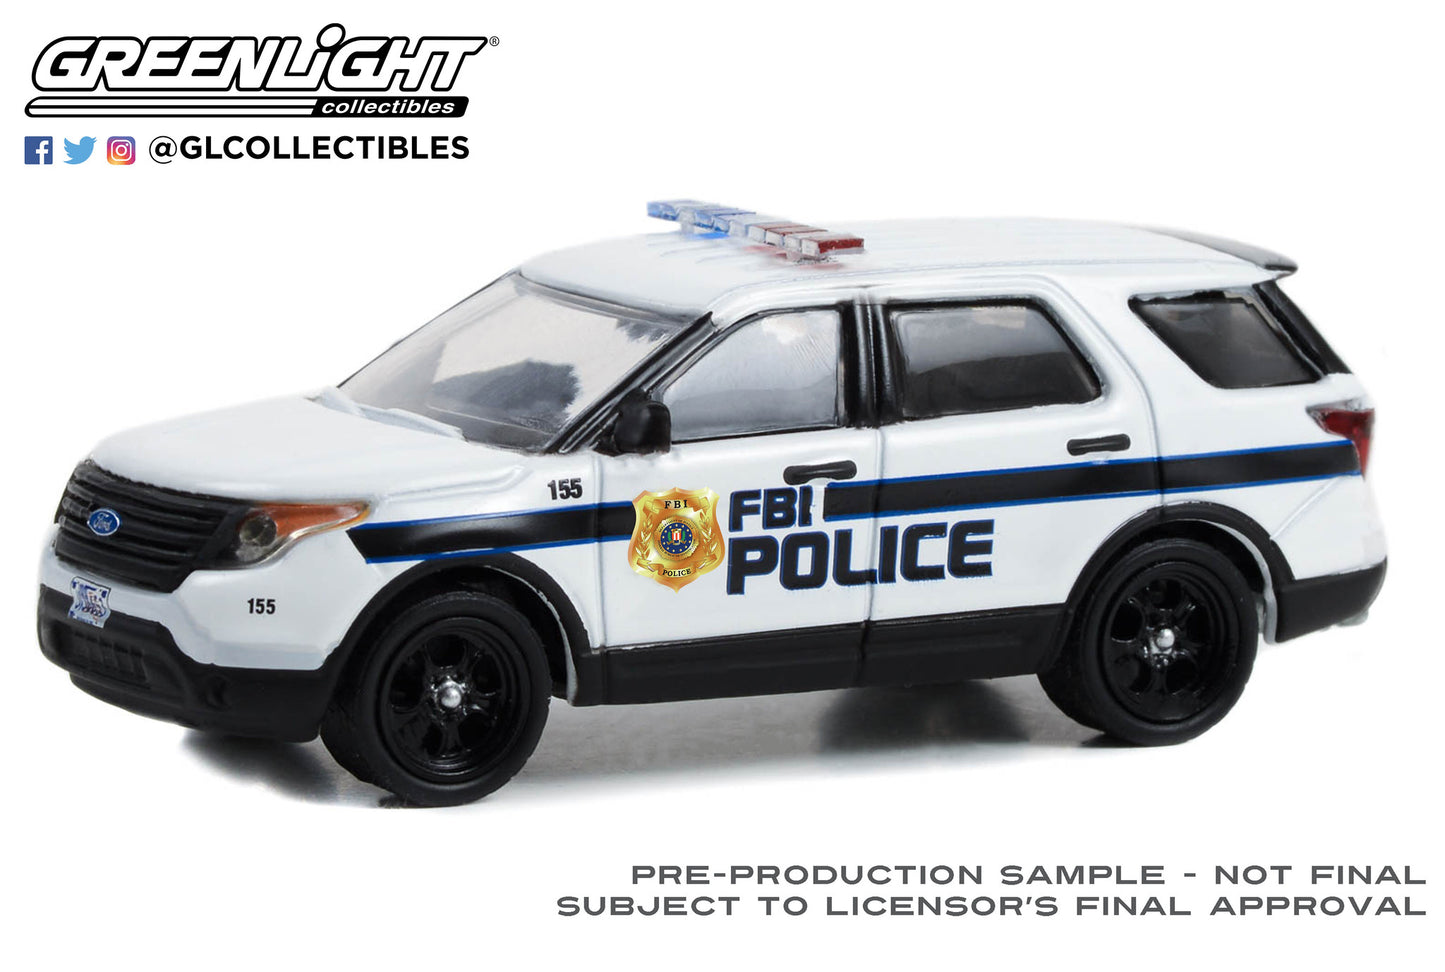 GreenLight 1:64 Hot Pursuit Special Edition - FBI Police (Federal Bureau of Investigation Police) - 2014 Ford Police Interceptor Utility 43025-D